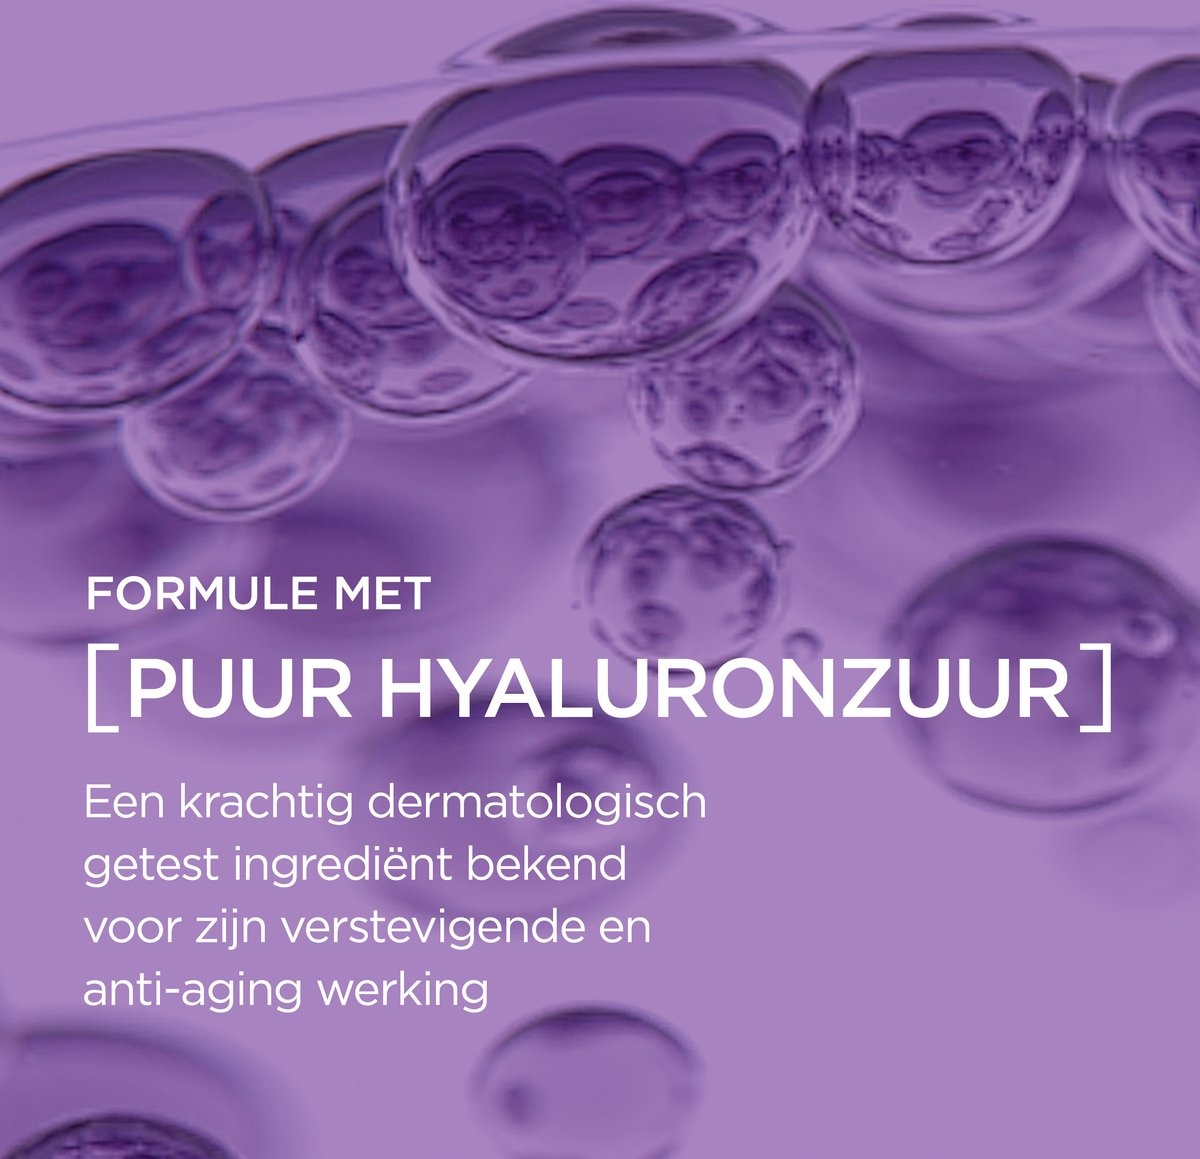 L'Oréal Paris Revitalift Volumegevende Toner - Gezichtsreiniger met hyaluronzuur - 200 ml